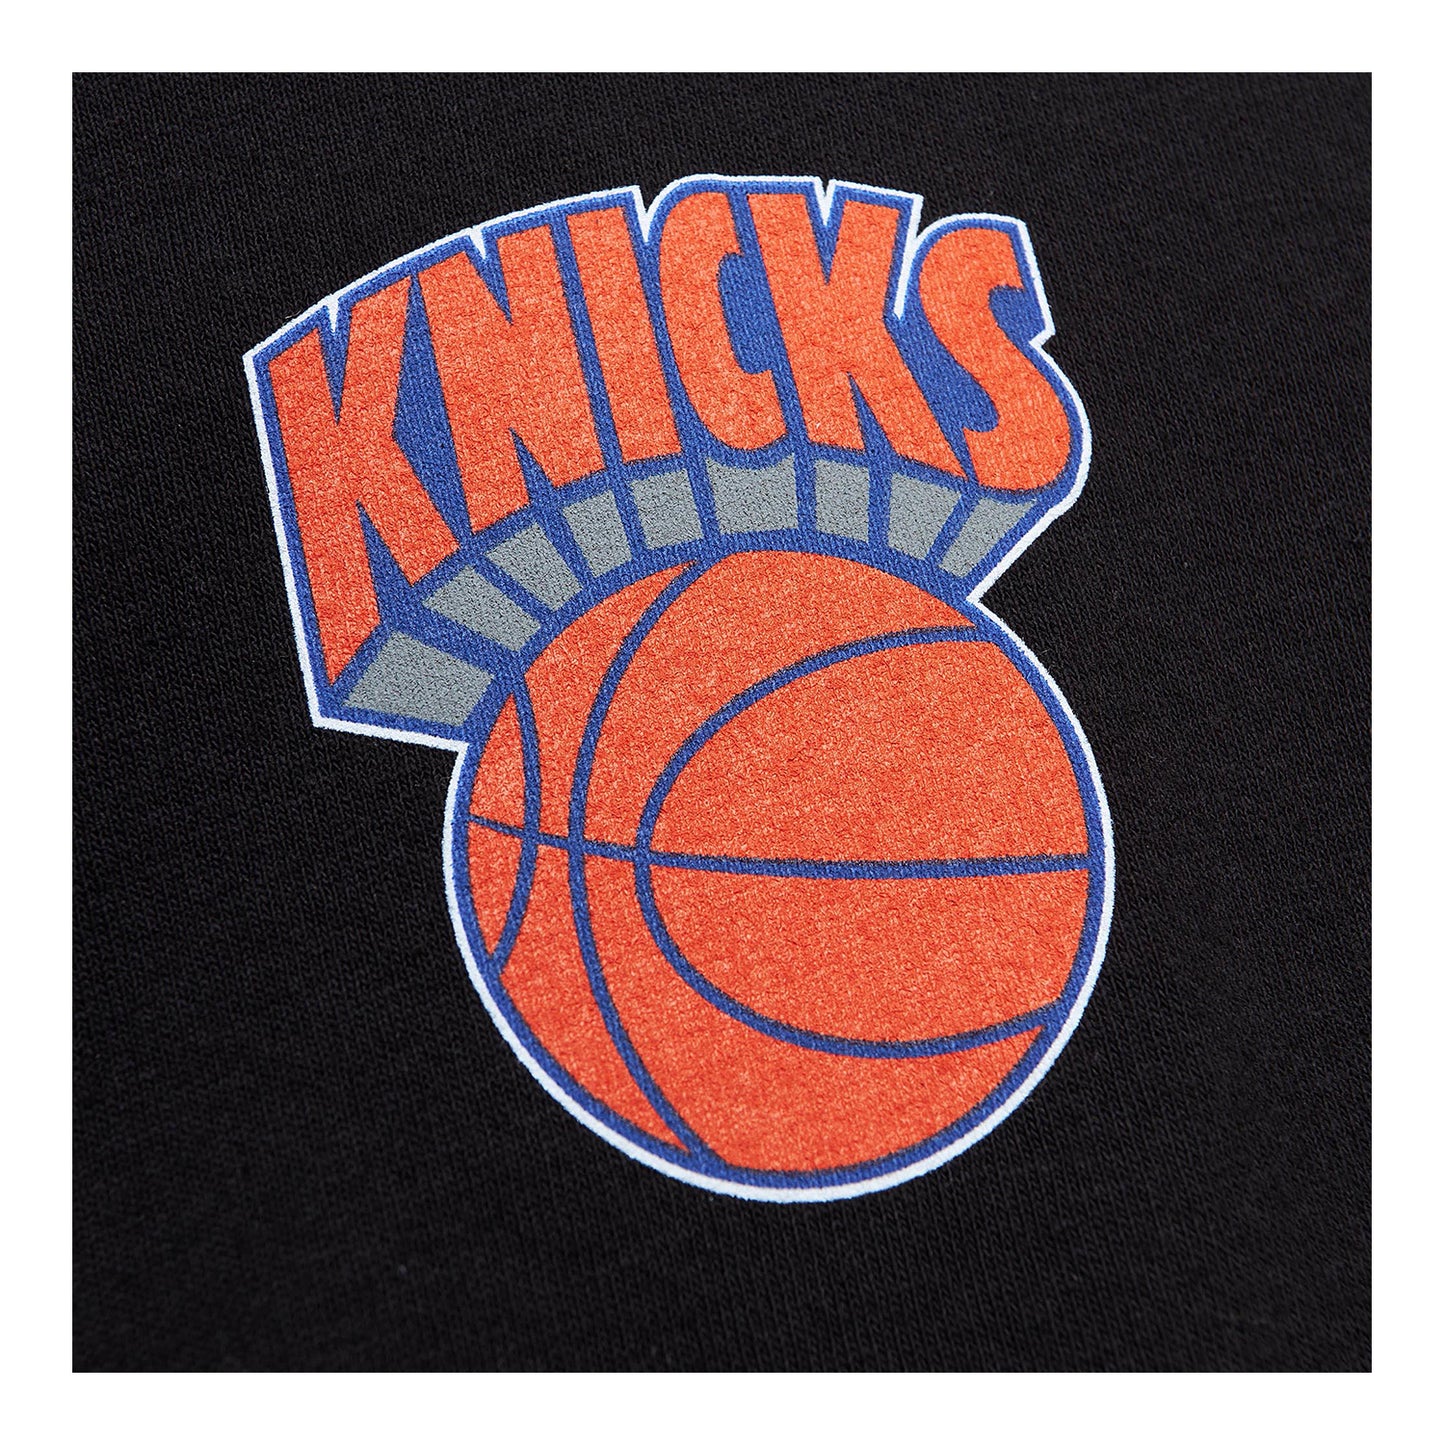 Mitchell & Ness Knicks SUGA Glitch Tee - Up Close Front View